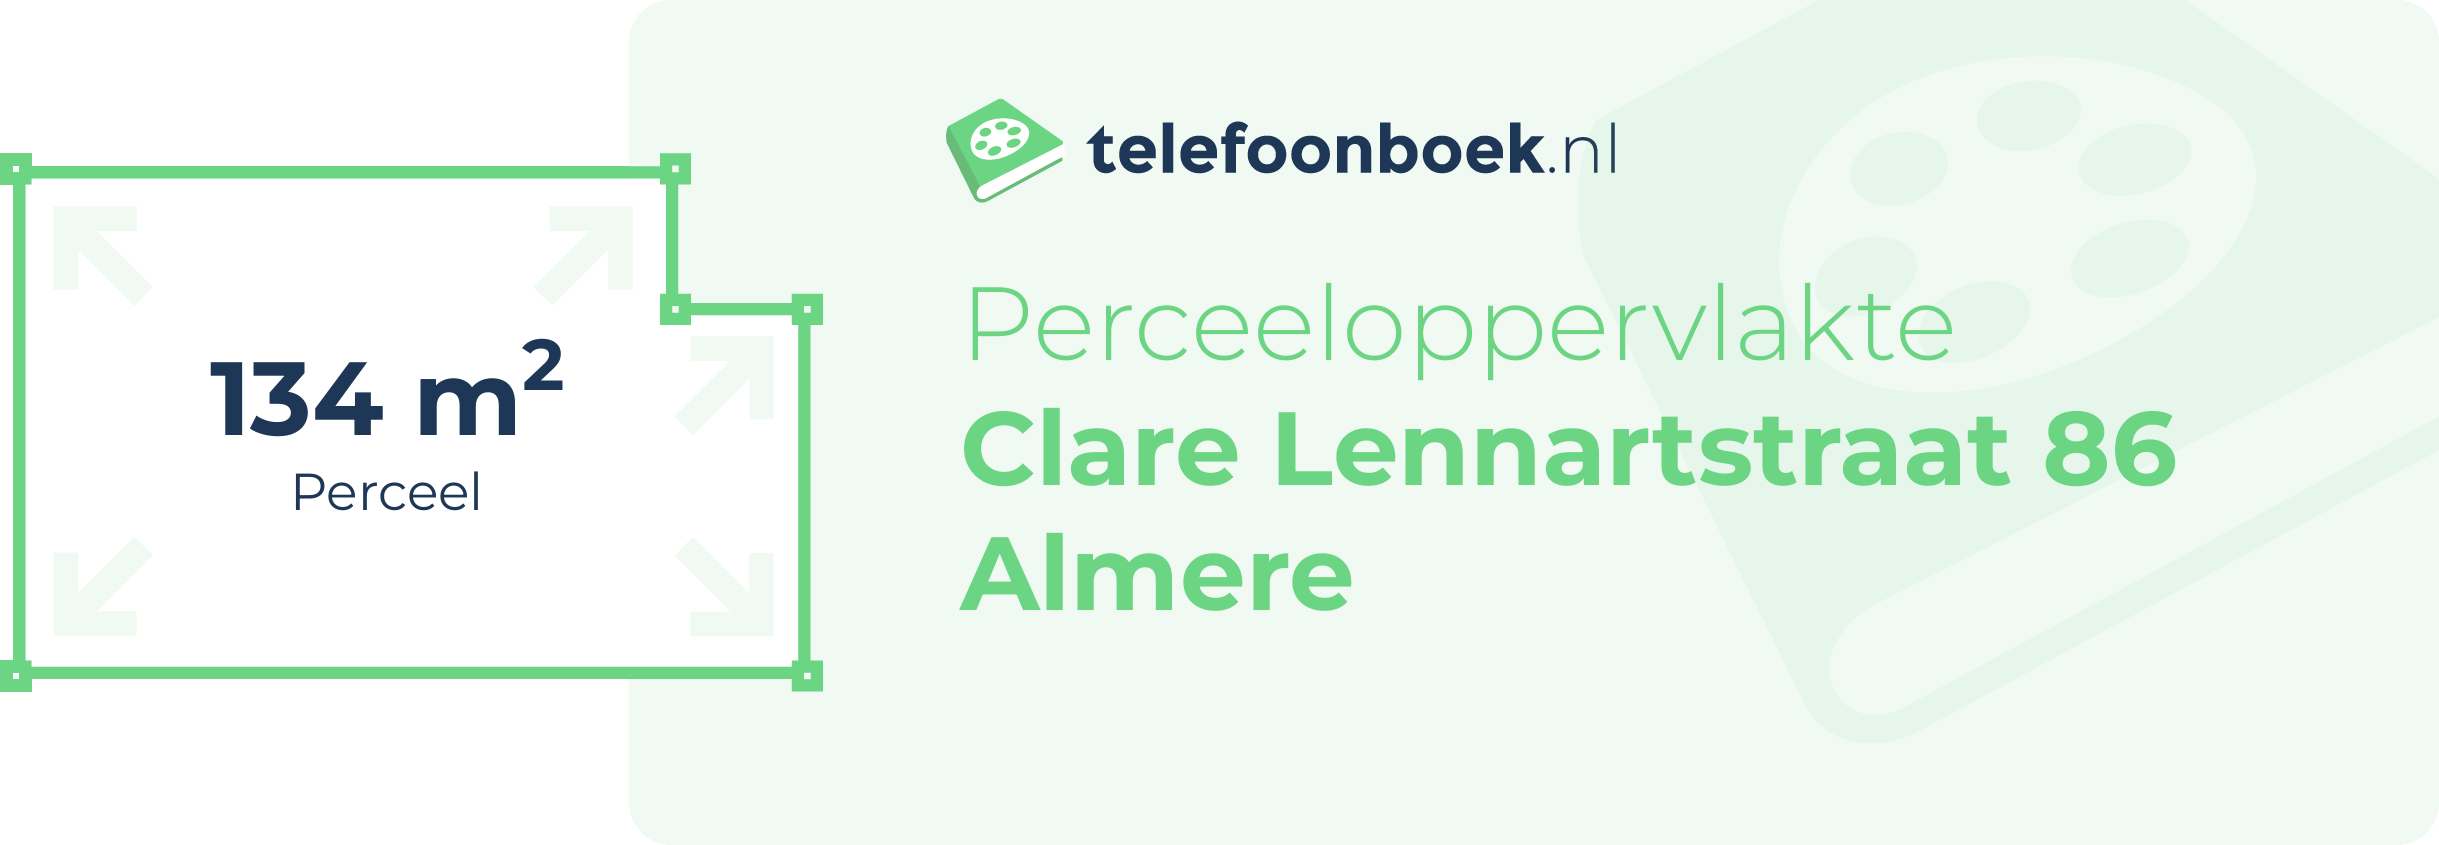 Perceeloppervlakte Clare Lennartstraat 86 Almere